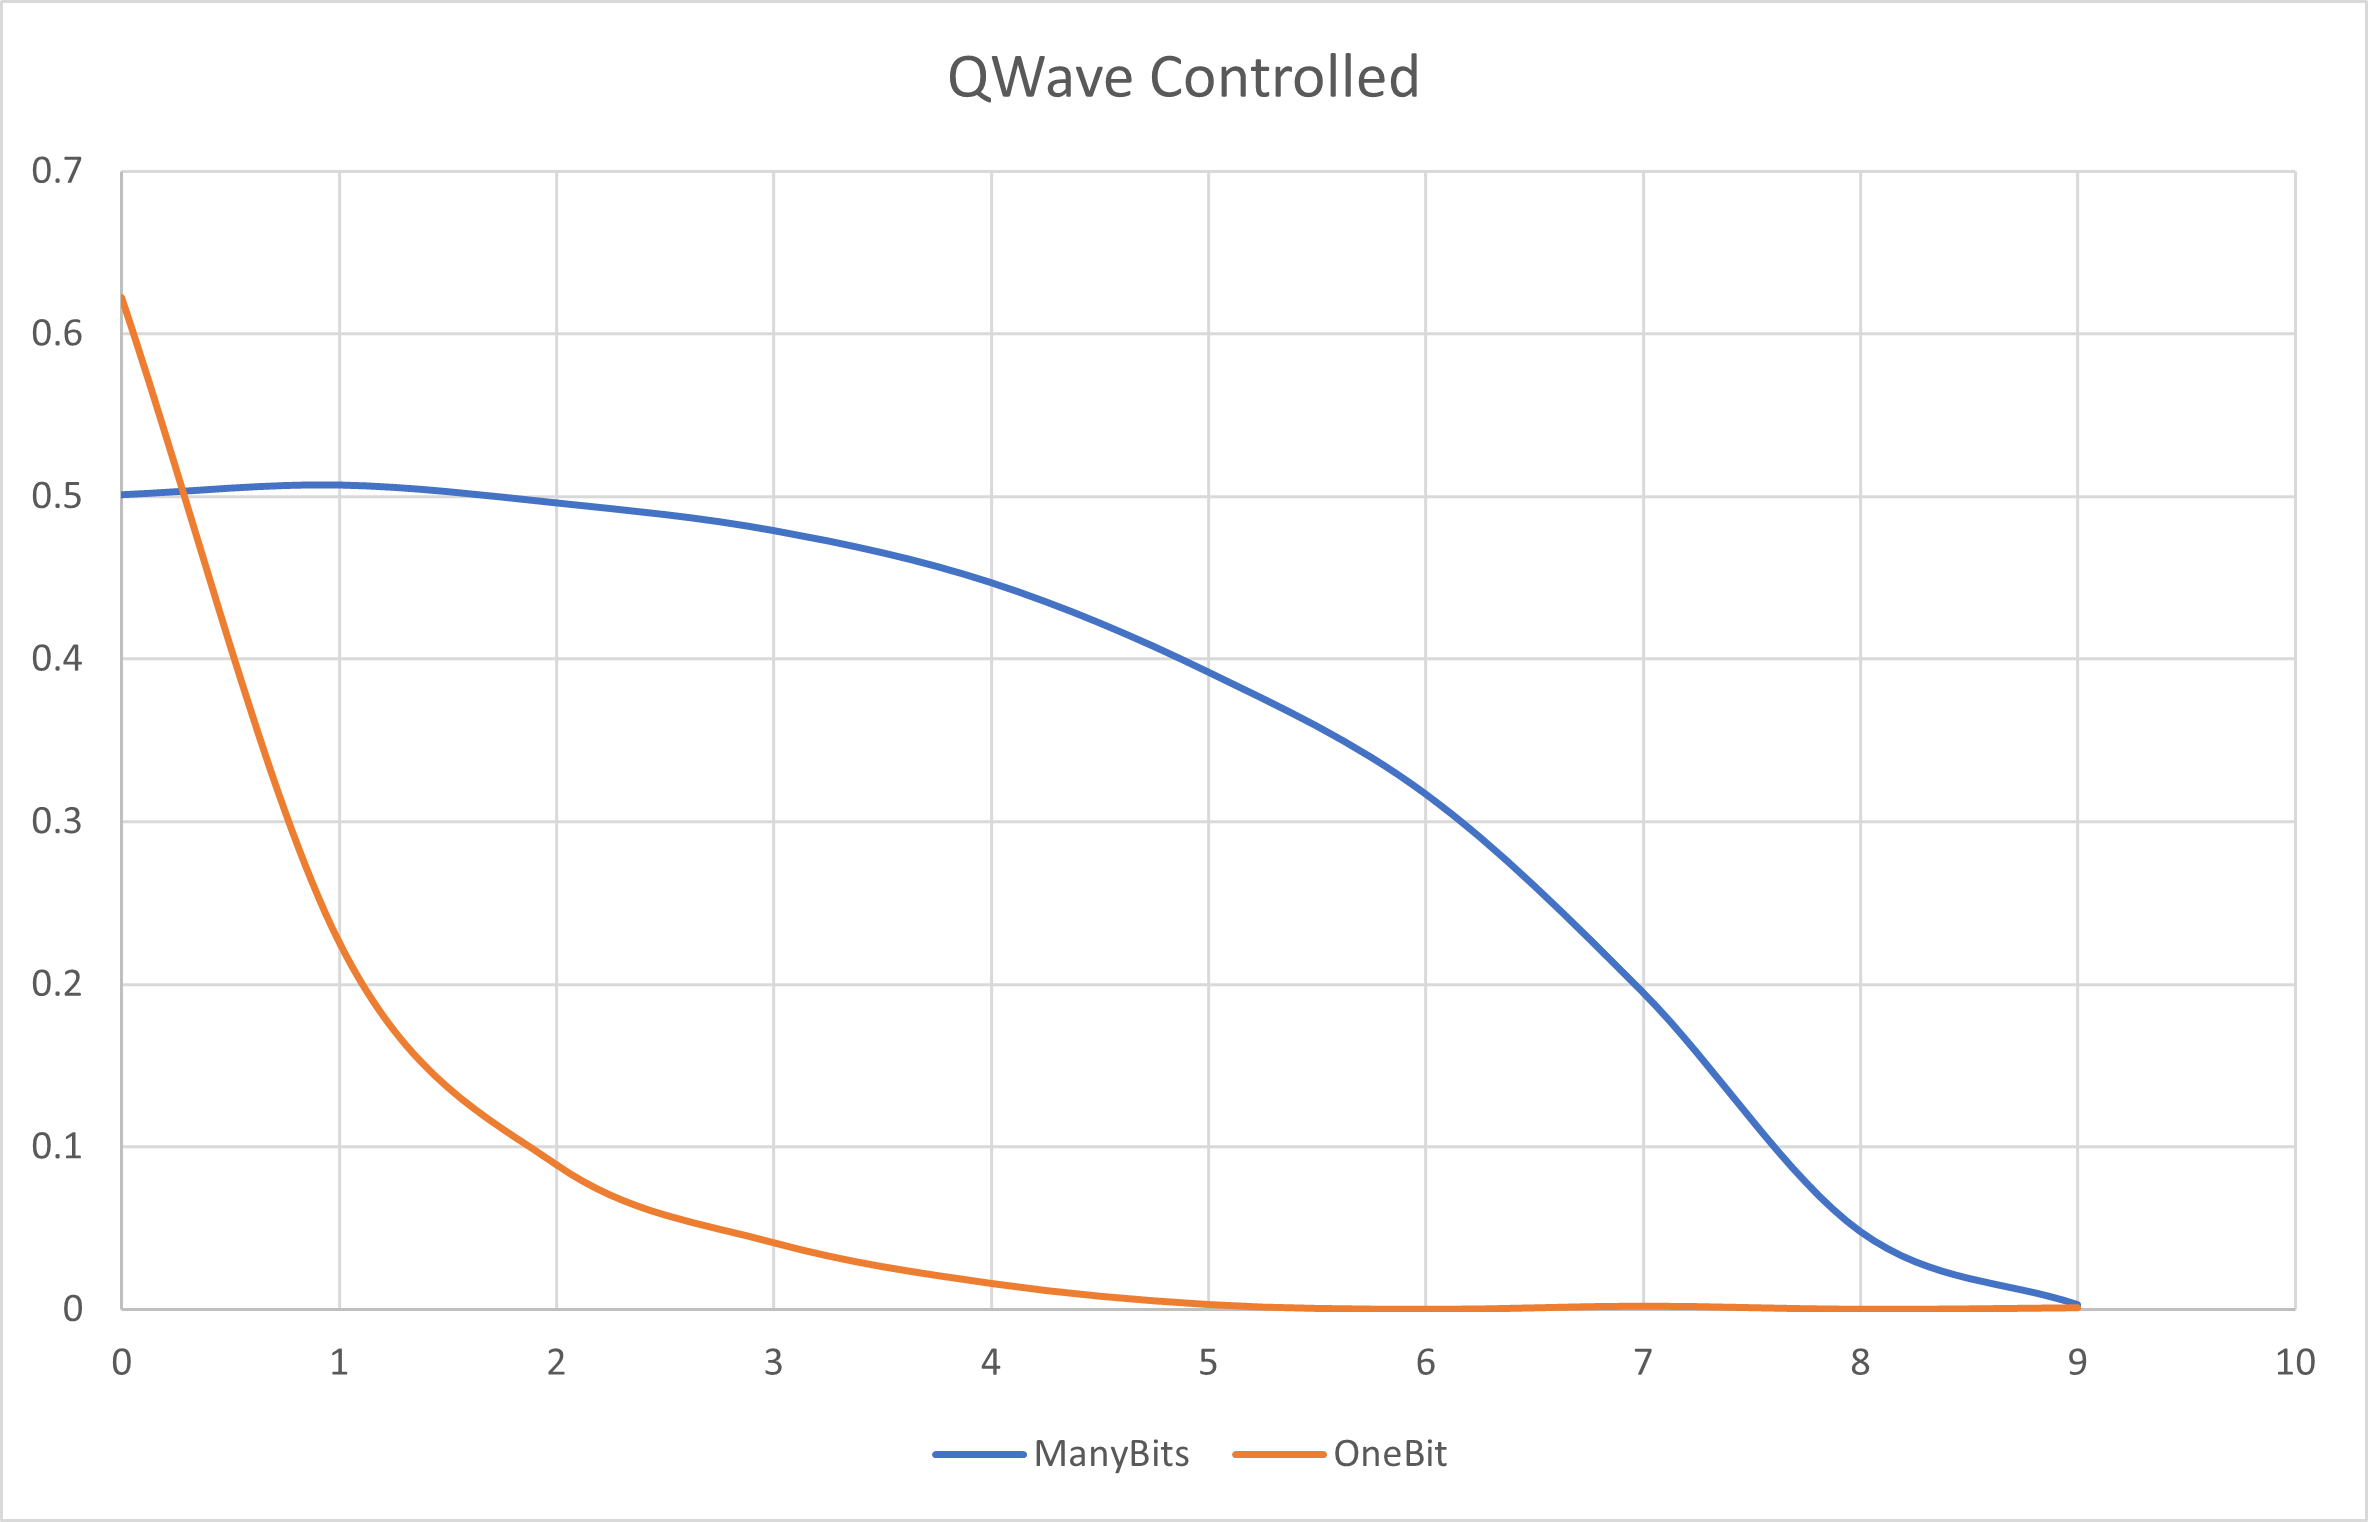 Comparison of OneBit vs. ManyBits